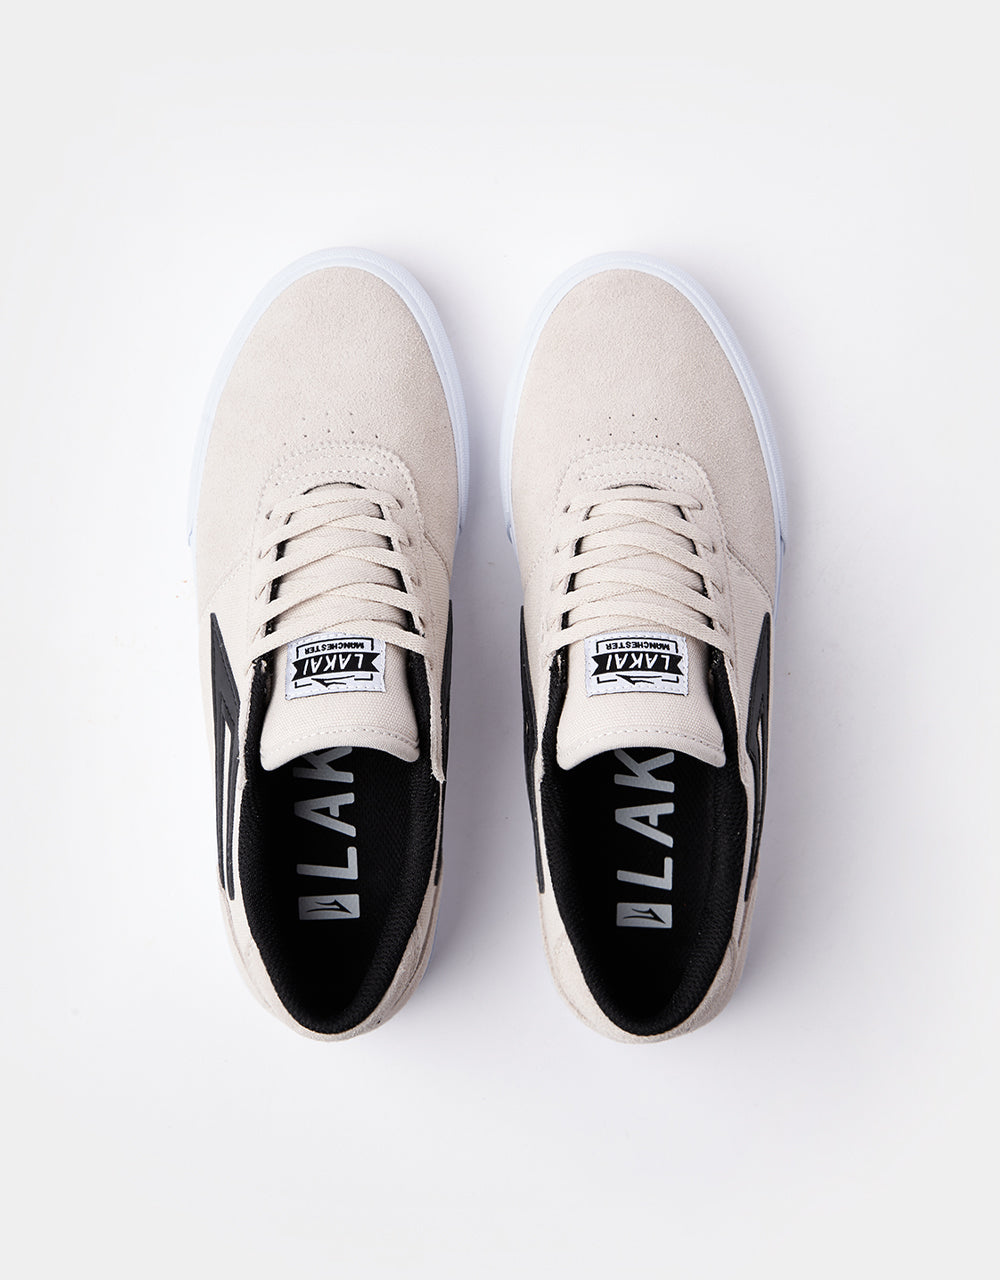 Lakai Manchester Skate Shoes - White/Black Suede